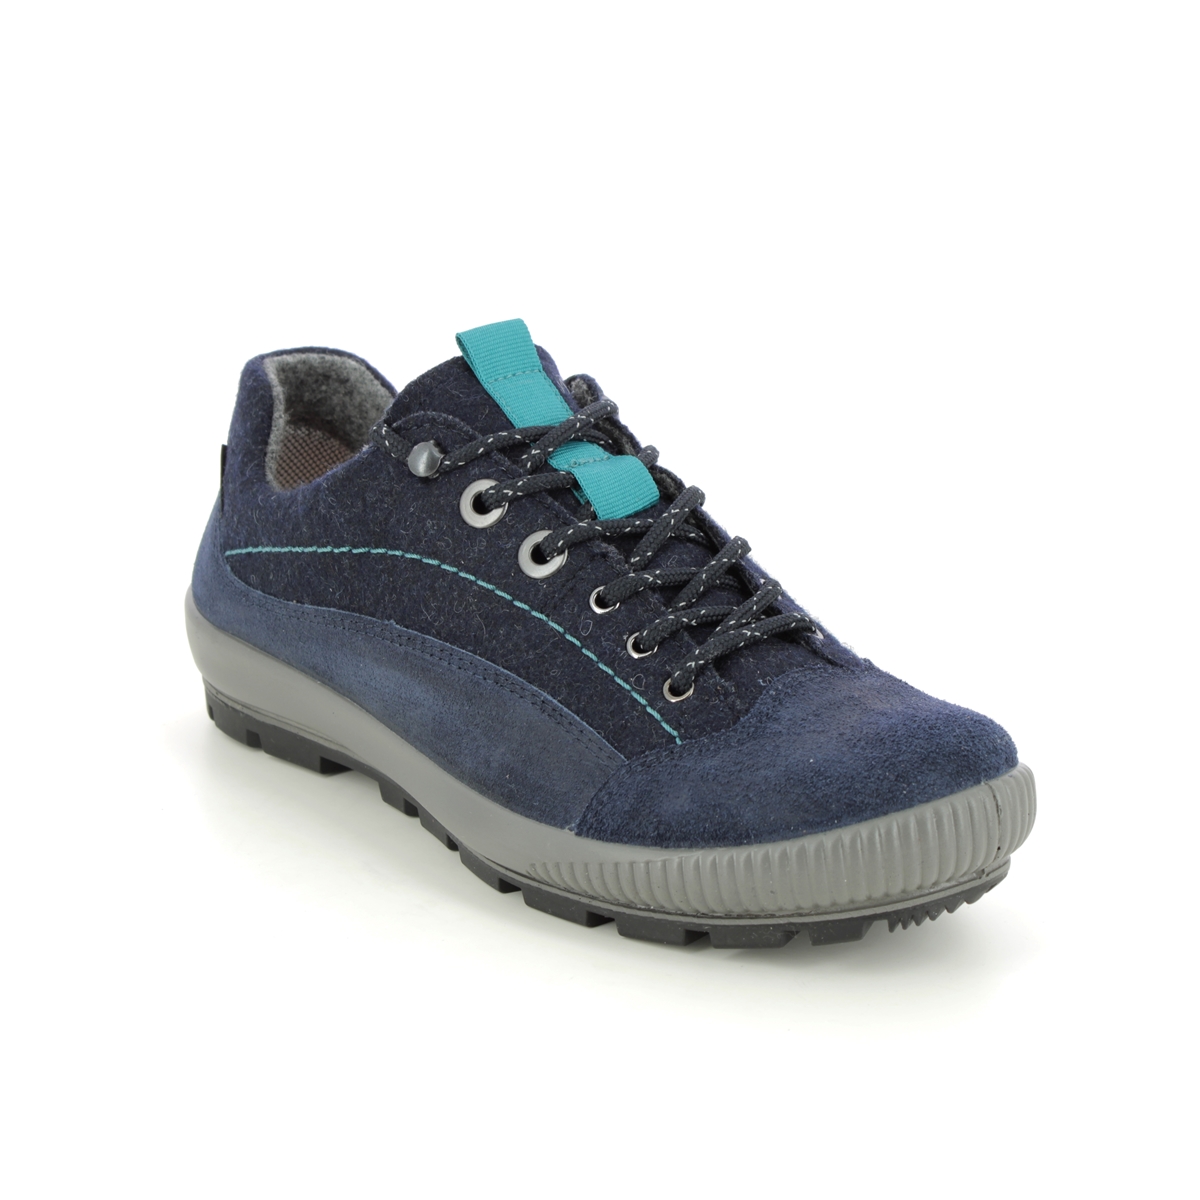 Legero Tanaro Trek Gtx Navy Suede Womens Walking Shoes 2000124-8010 In Size 5 In Plain Navy Suede